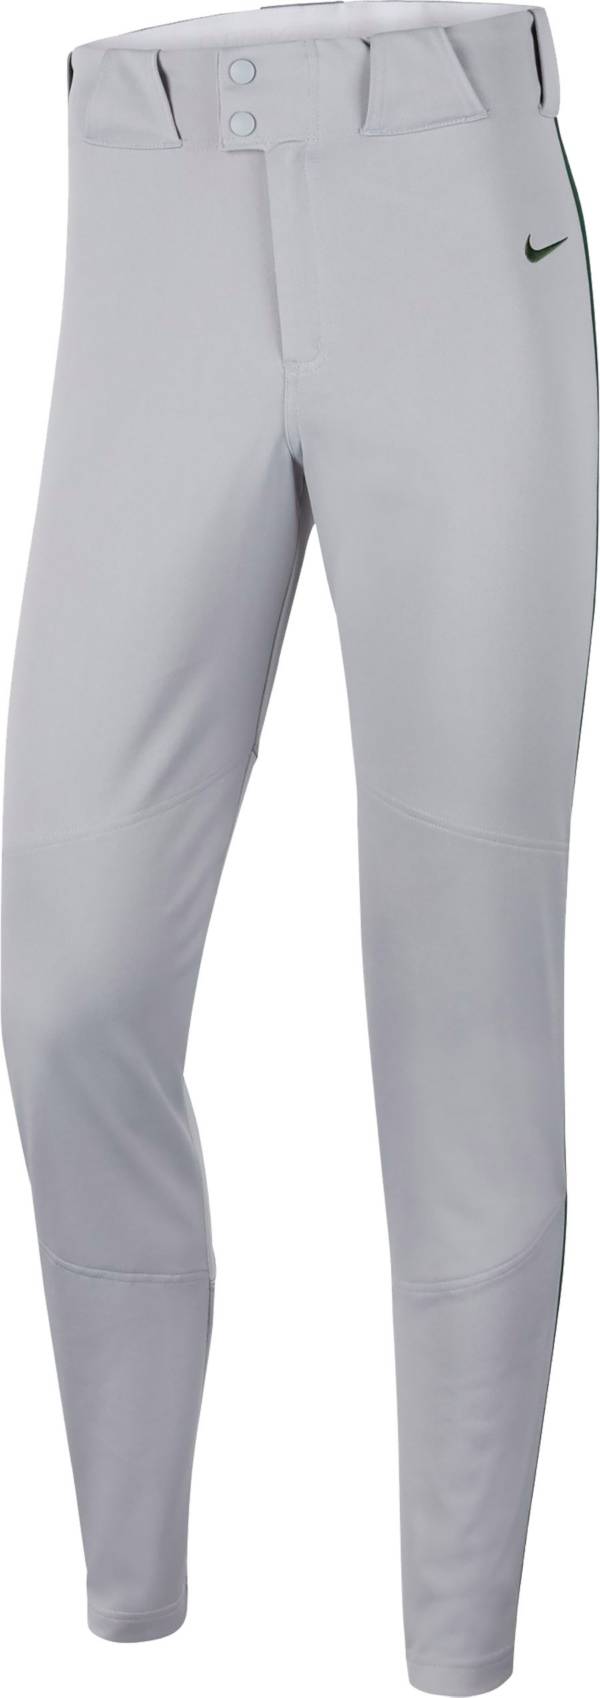 Nike Men's Vapor Select Piped Baseball Pants product image